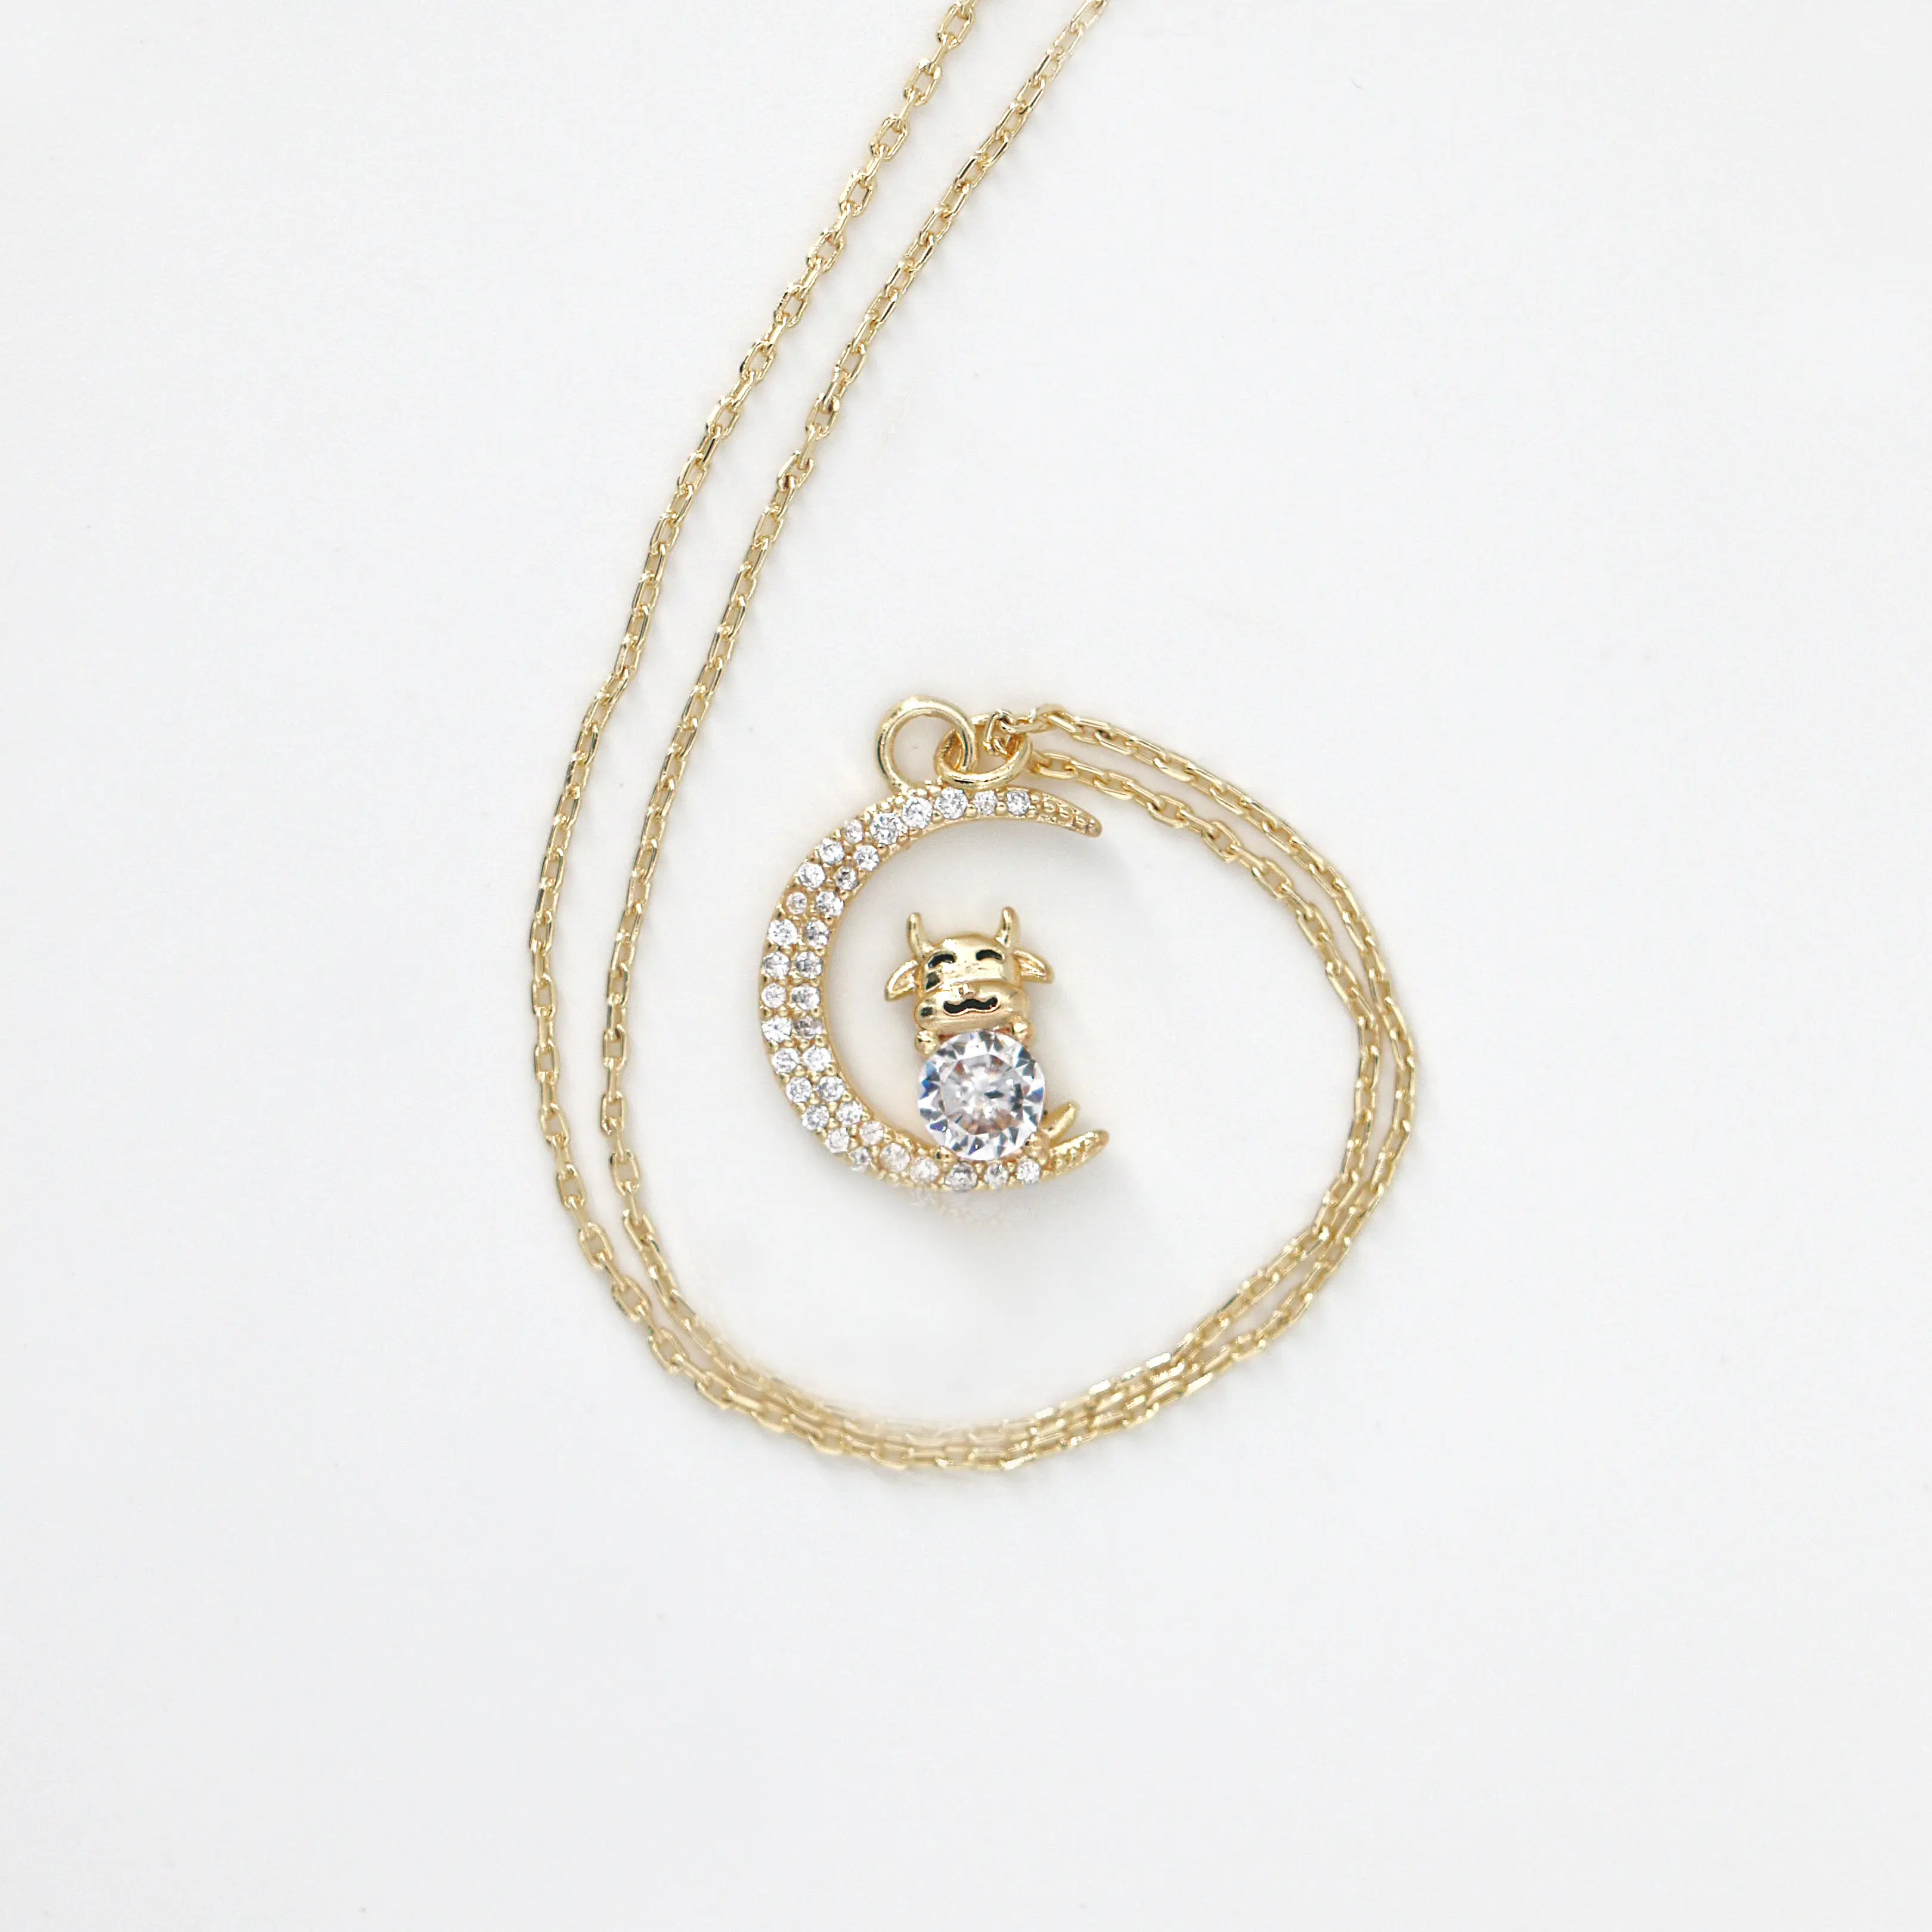 Manufactory Wholesale Brass Zircon Fashion Jewelry For Women Animal Pendant Necklace